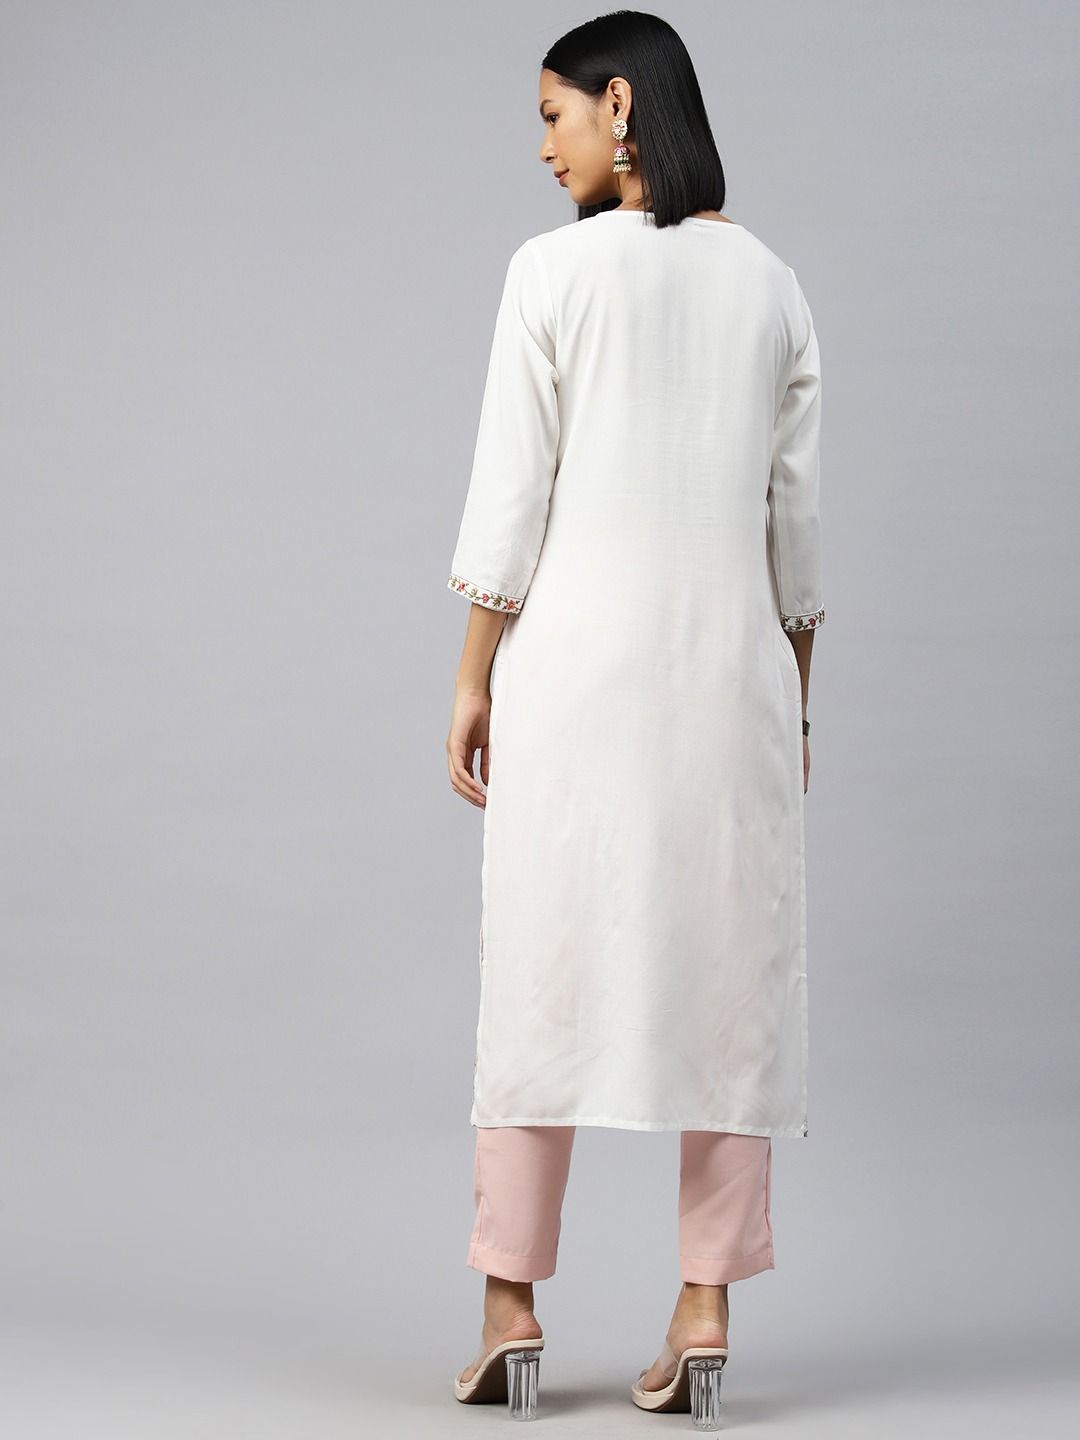 Straight Style Rayon Fabric White Color Kurti